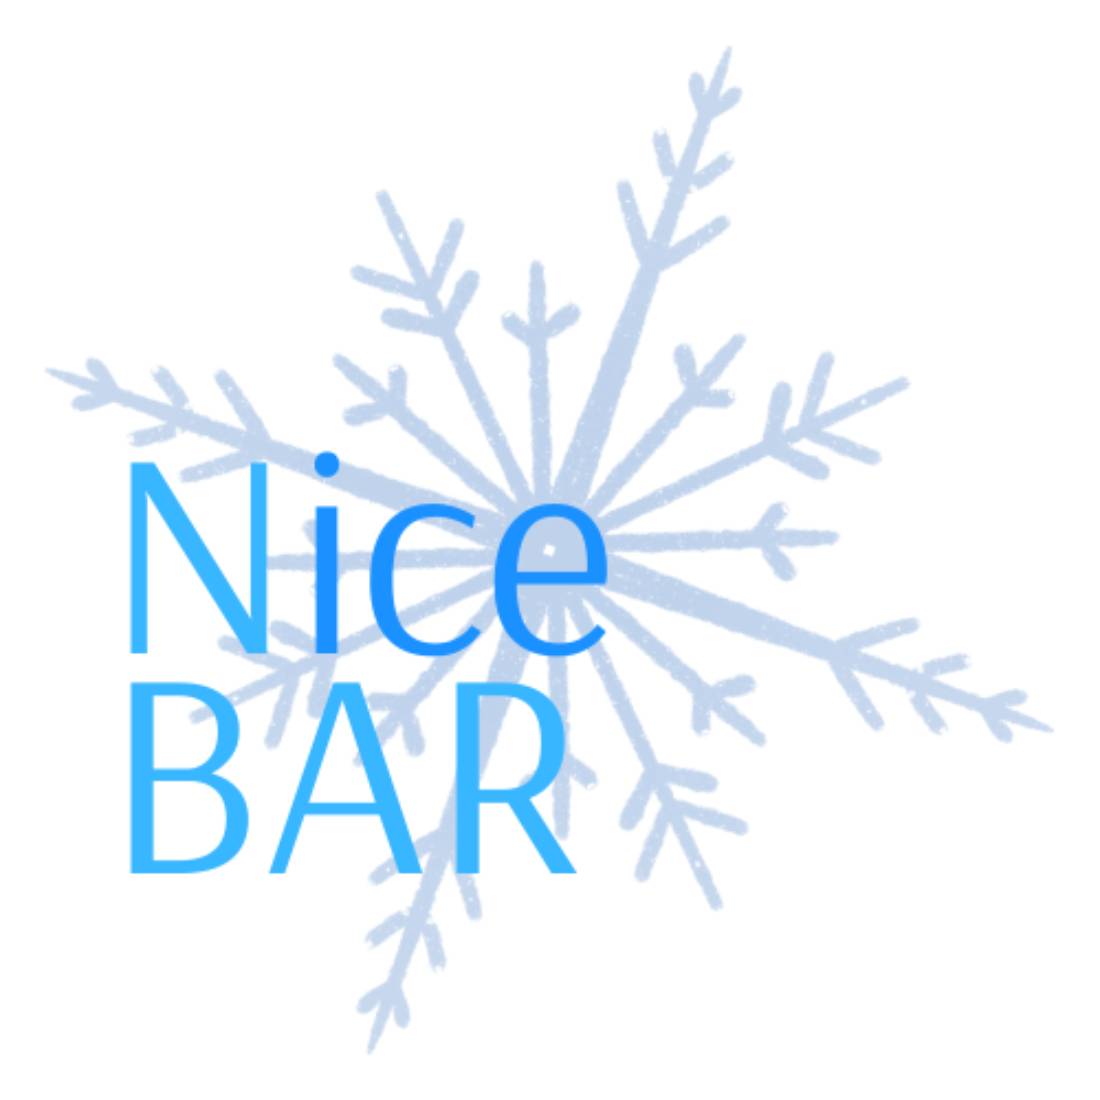 Nice Bar Logo Design cover image.